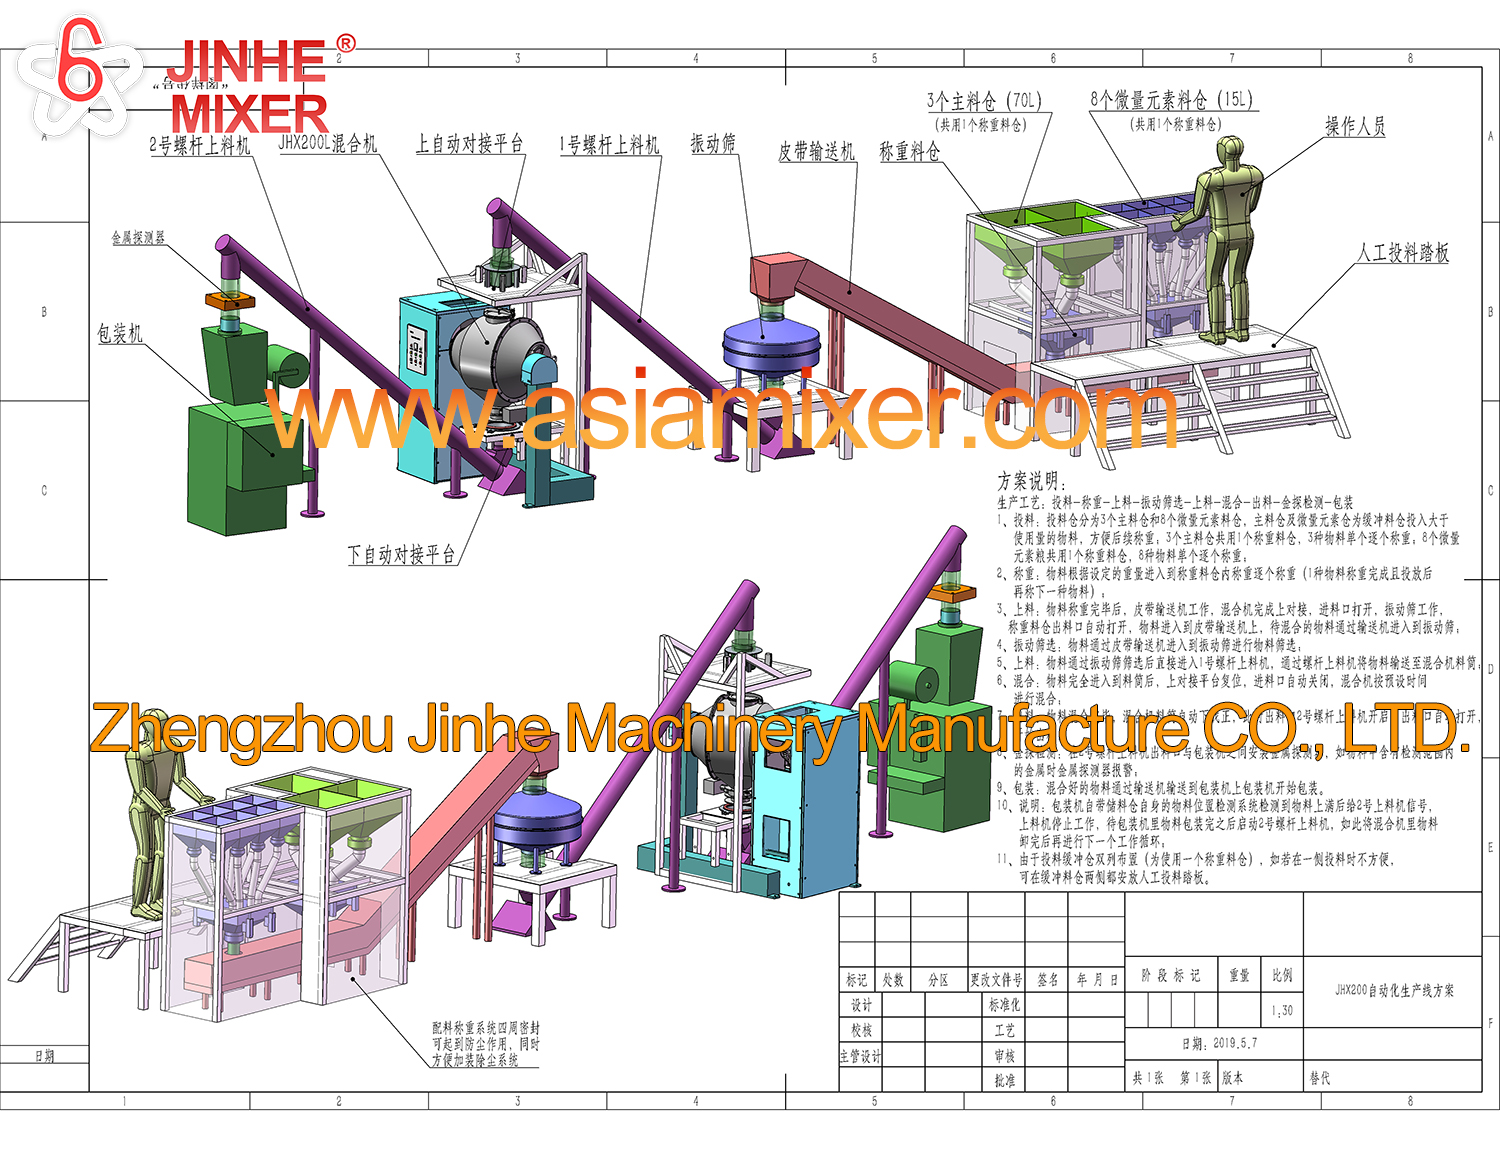 JINHE brand Double Motion Mixer Maintenance Manual